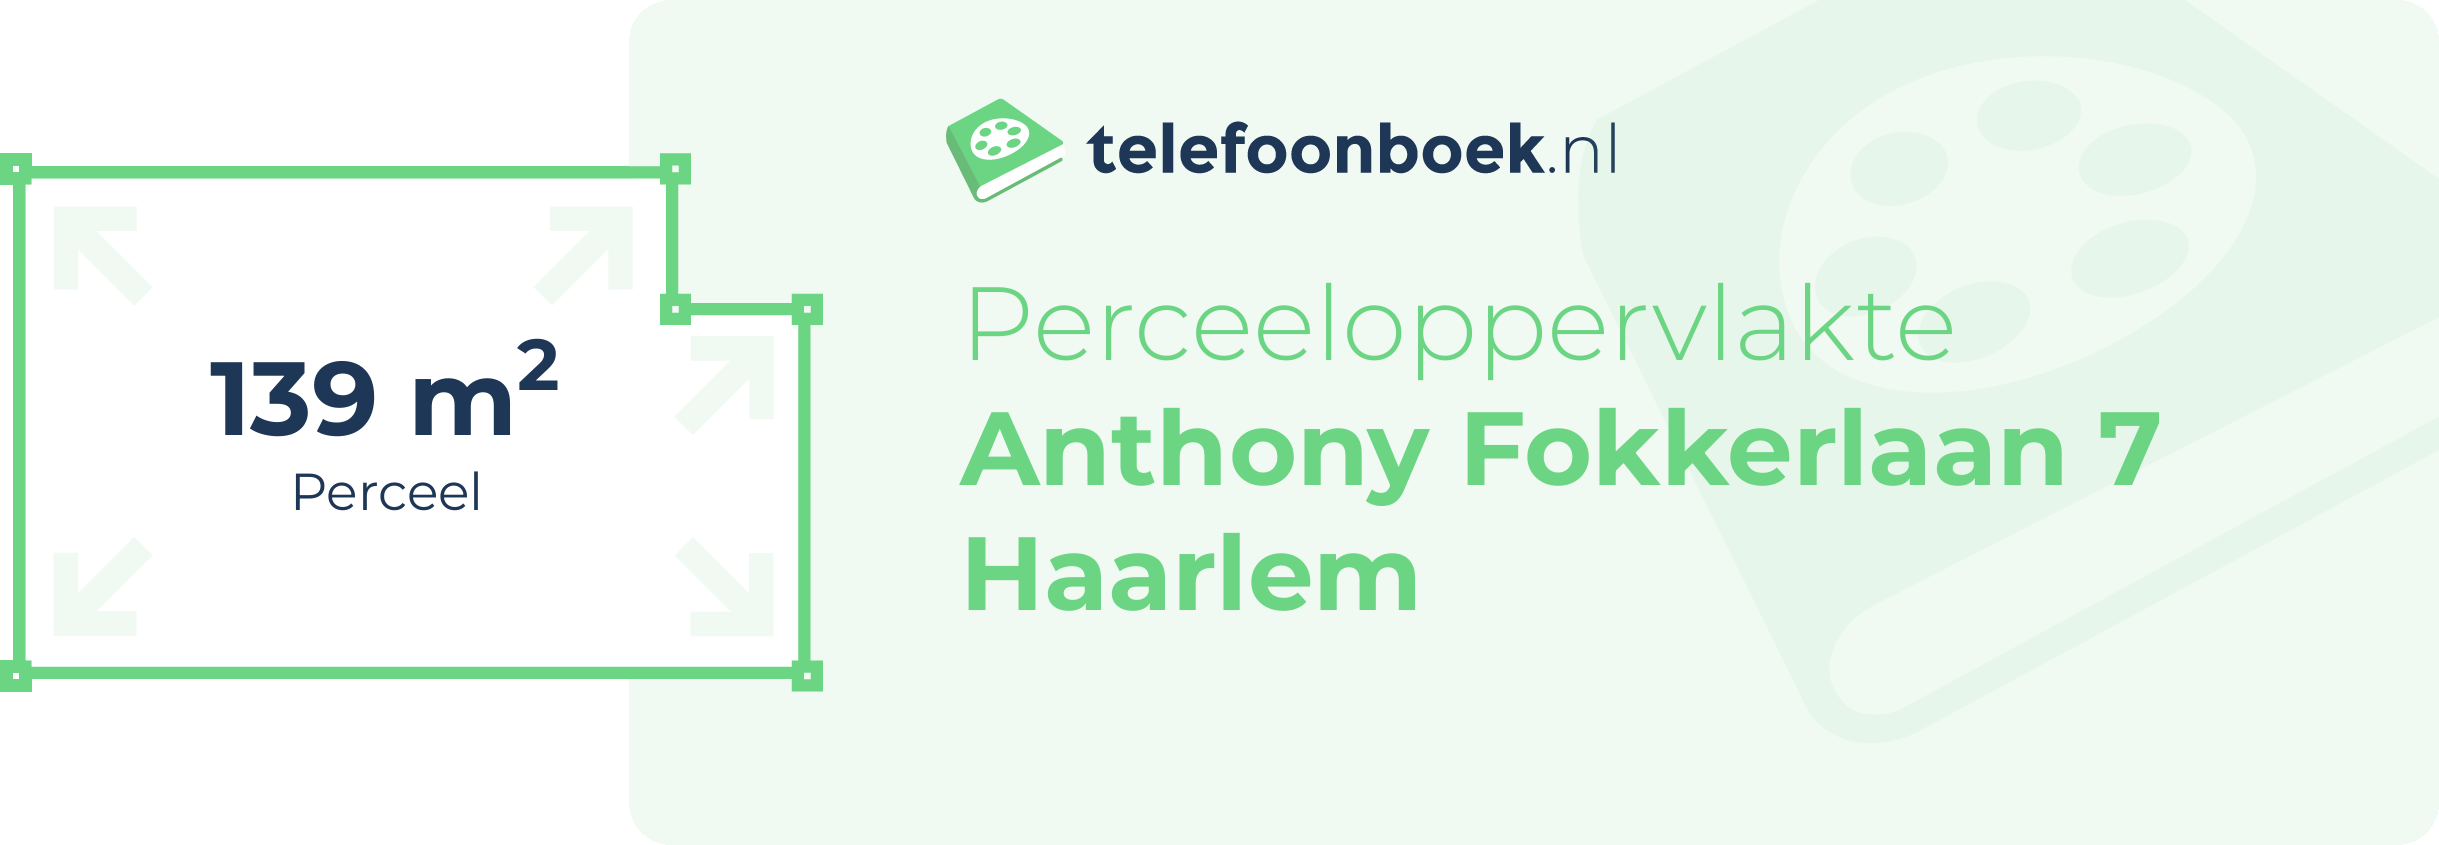 Perceeloppervlakte Anthony Fokkerlaan 7 Haarlem